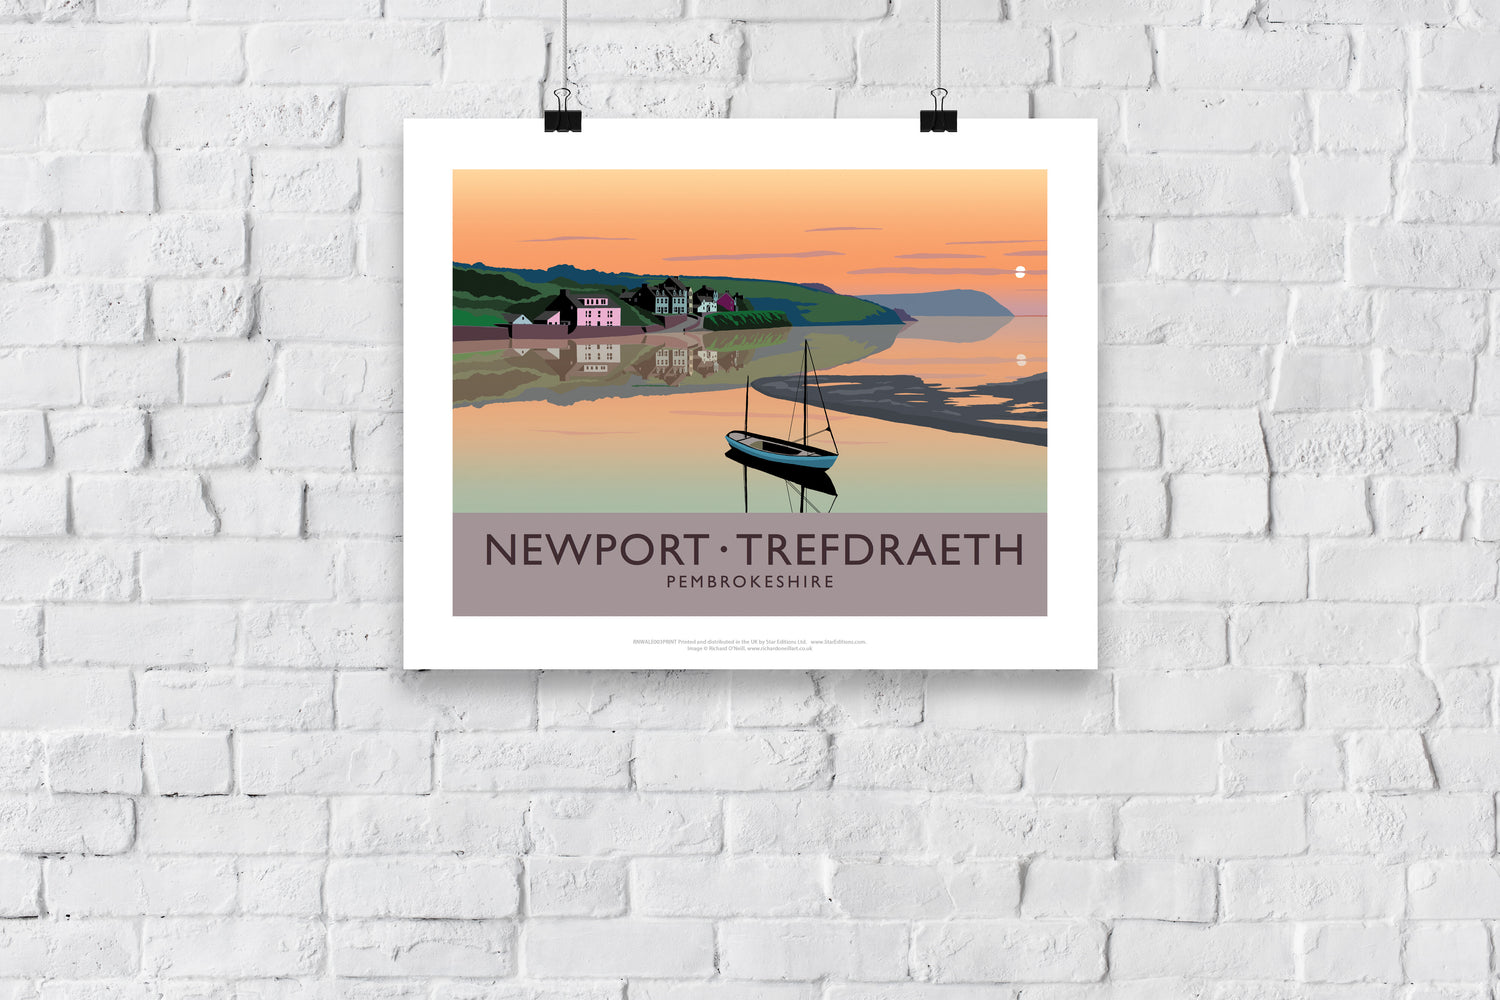 Newport, Trefdraeth, Pembrokeshire, Wales - Art Print